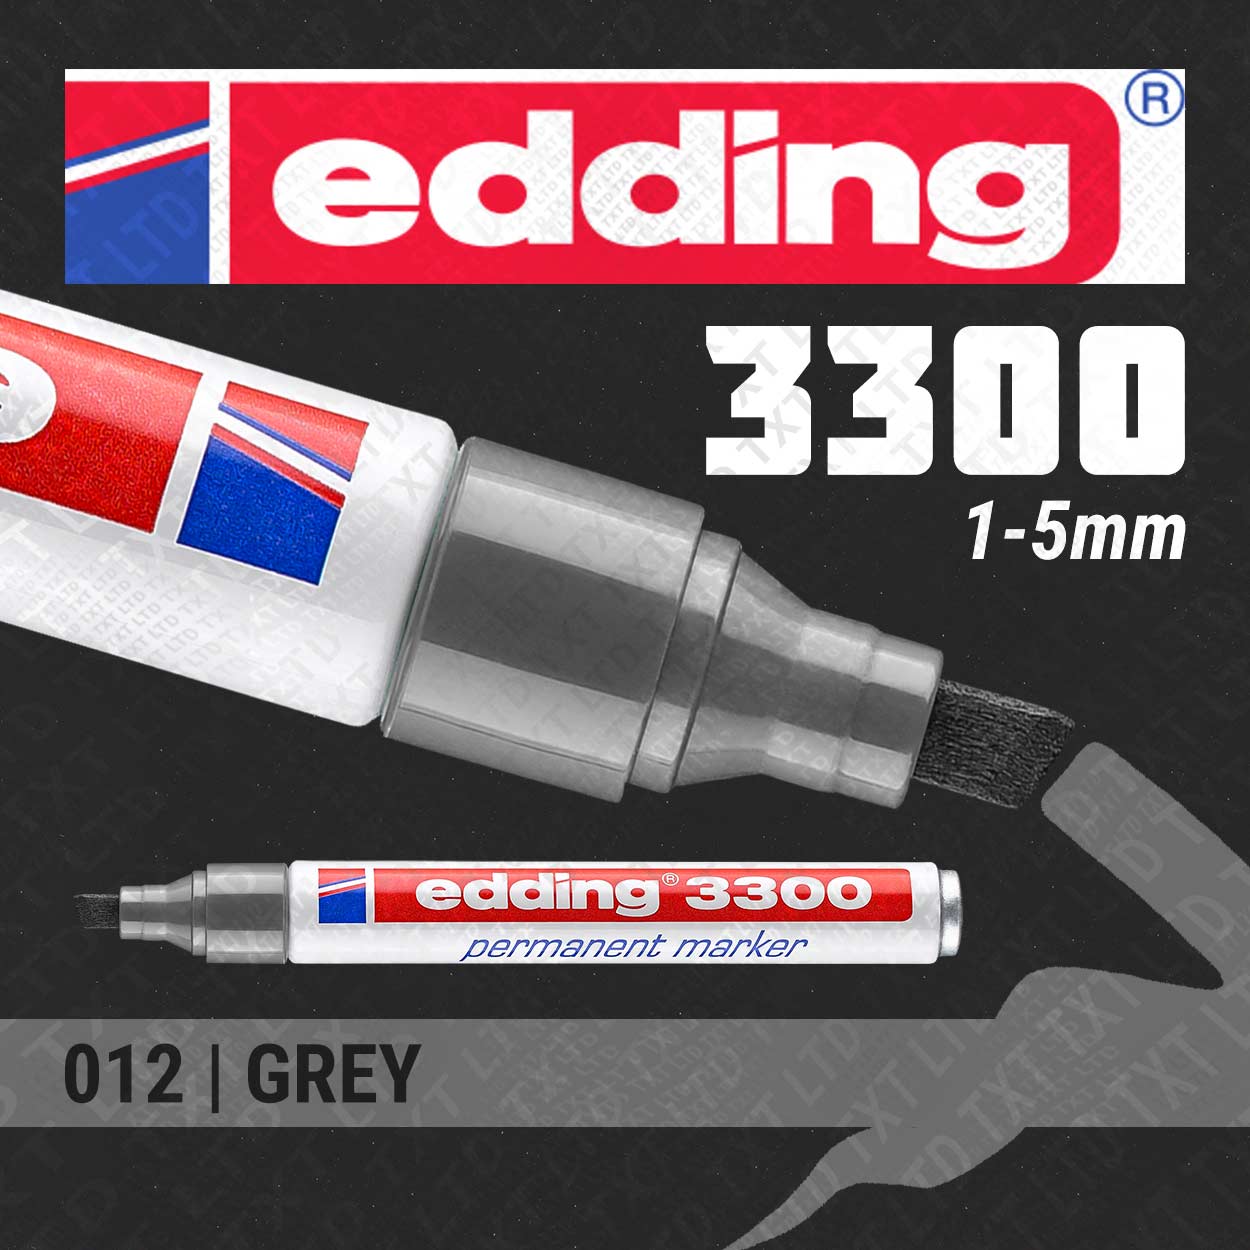 edding 3300 Permanent Marker